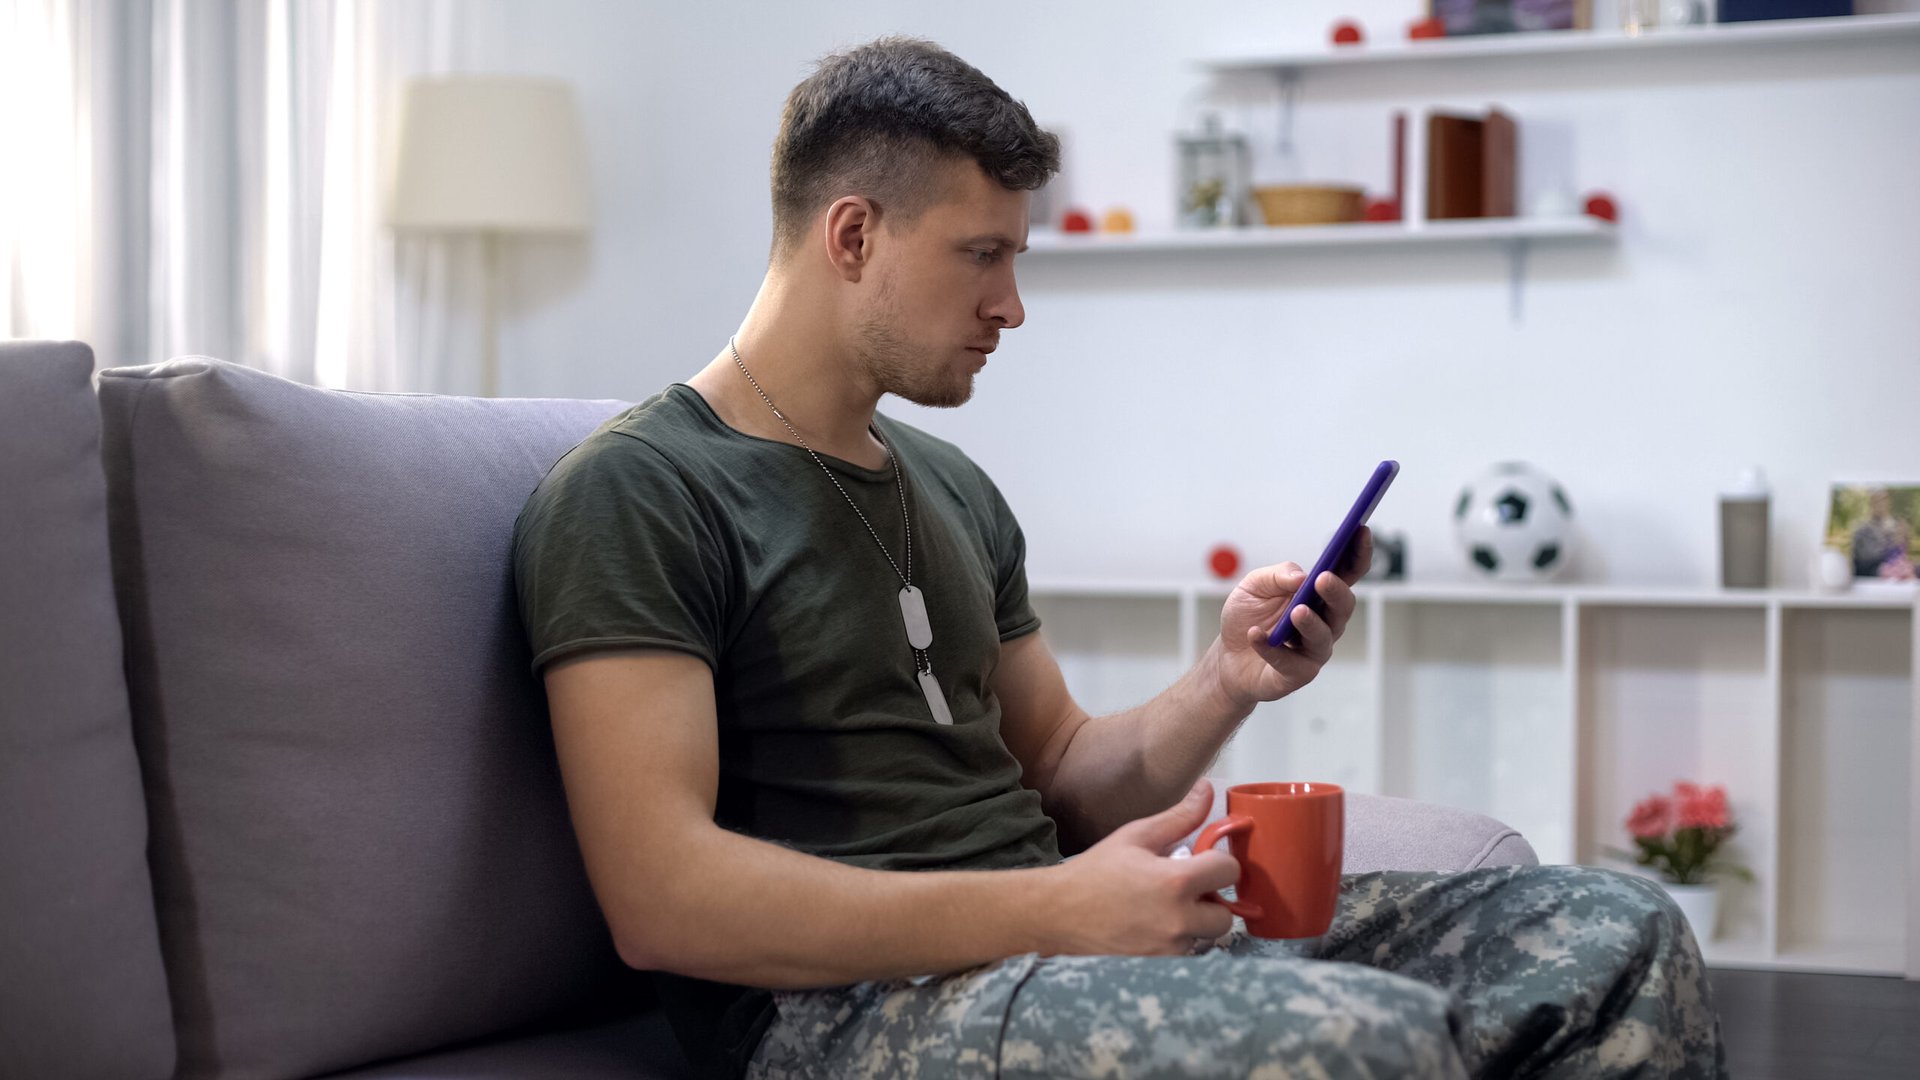 Military soldier or veteran using phone